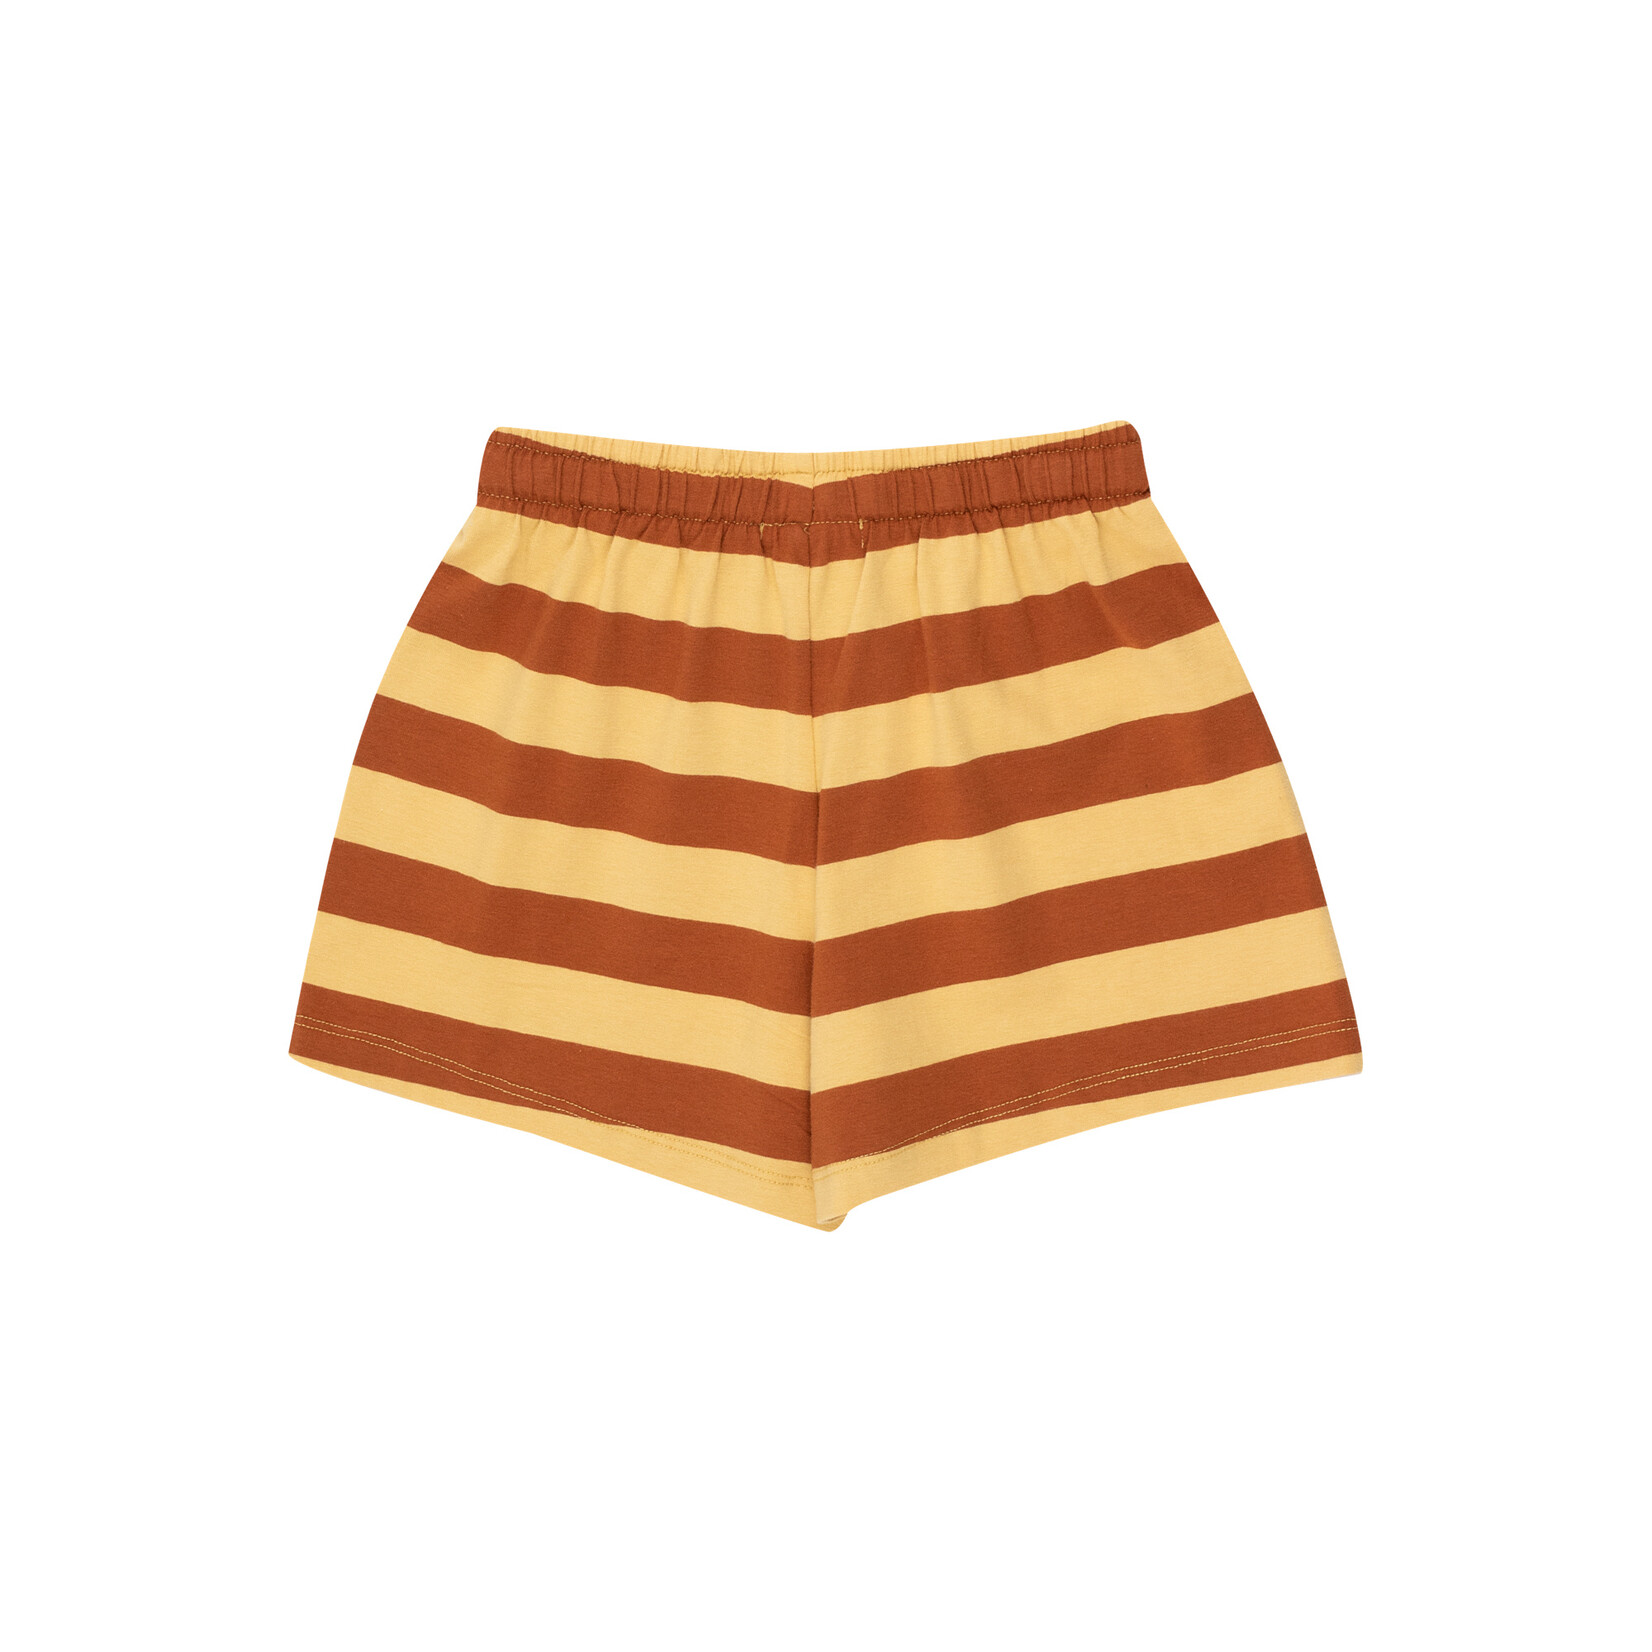 Tiny Cottons Stripes Short - Pale Ochre/ Dark Brown